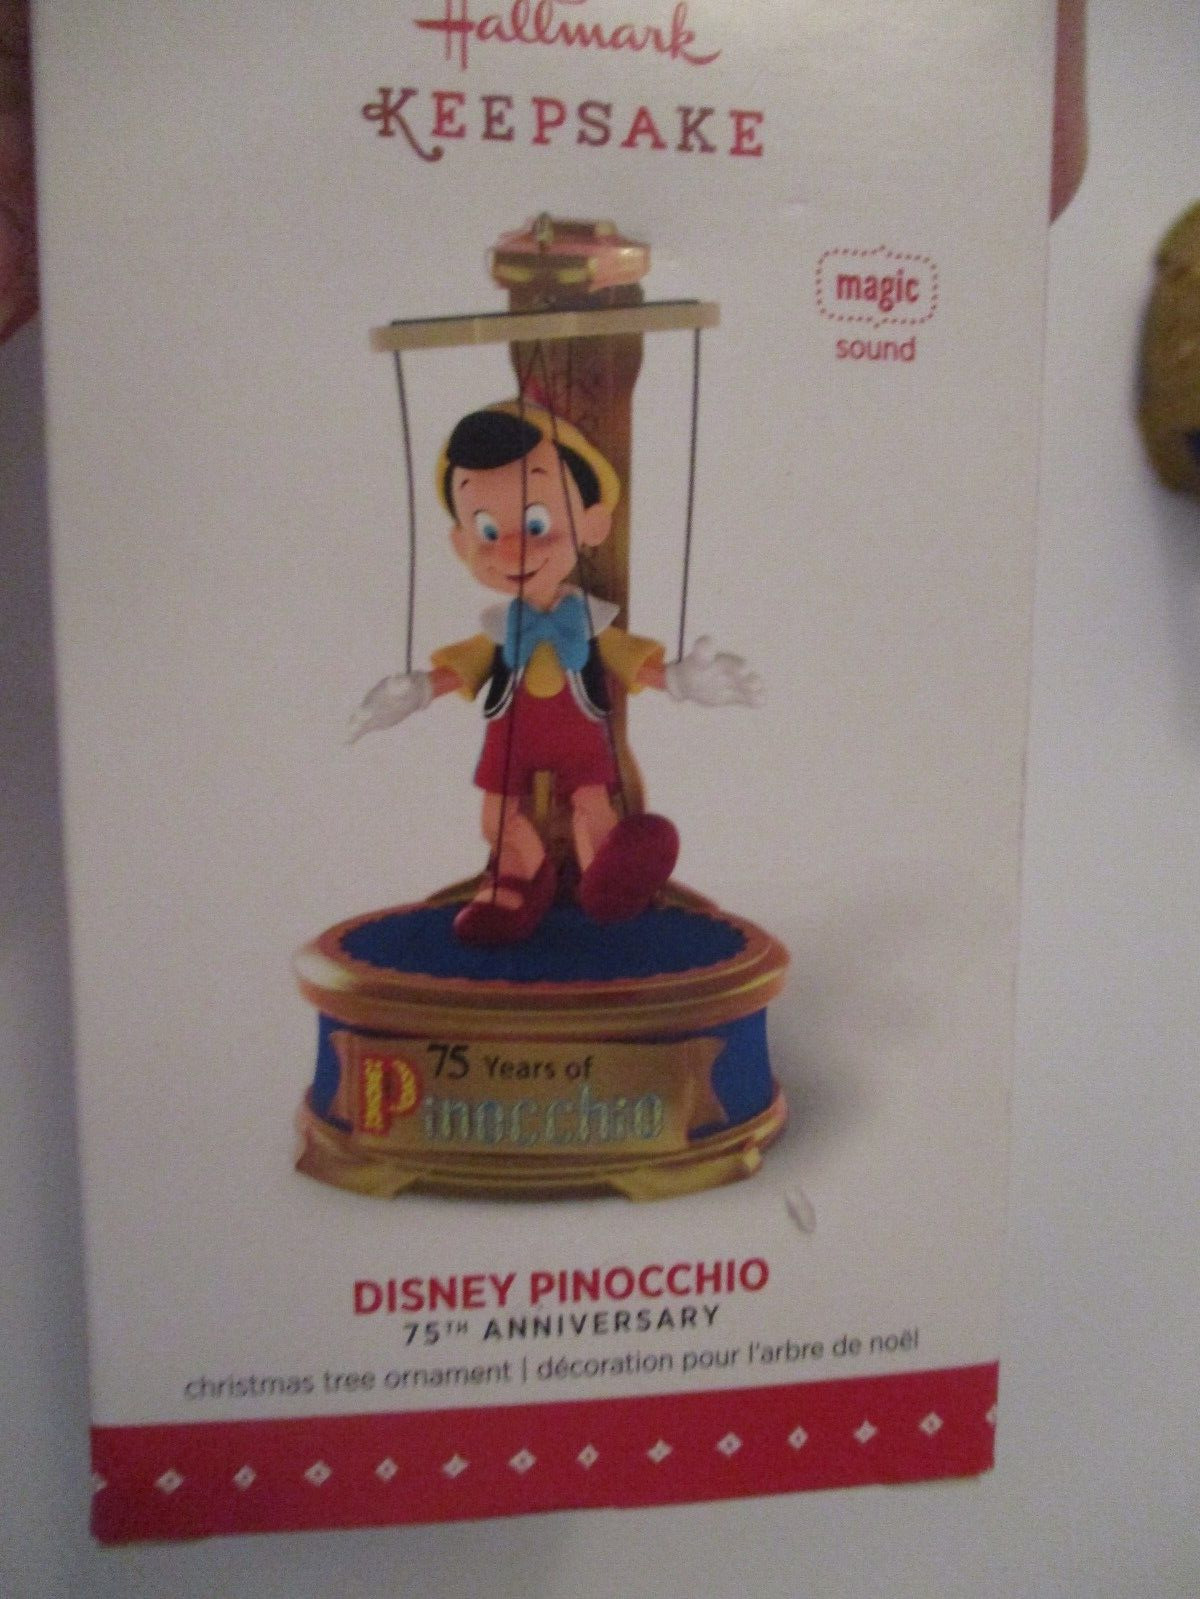 Hallmark 2015 Disney Pinocchio Keepsake Ornament - Magic -  75th Anniversary